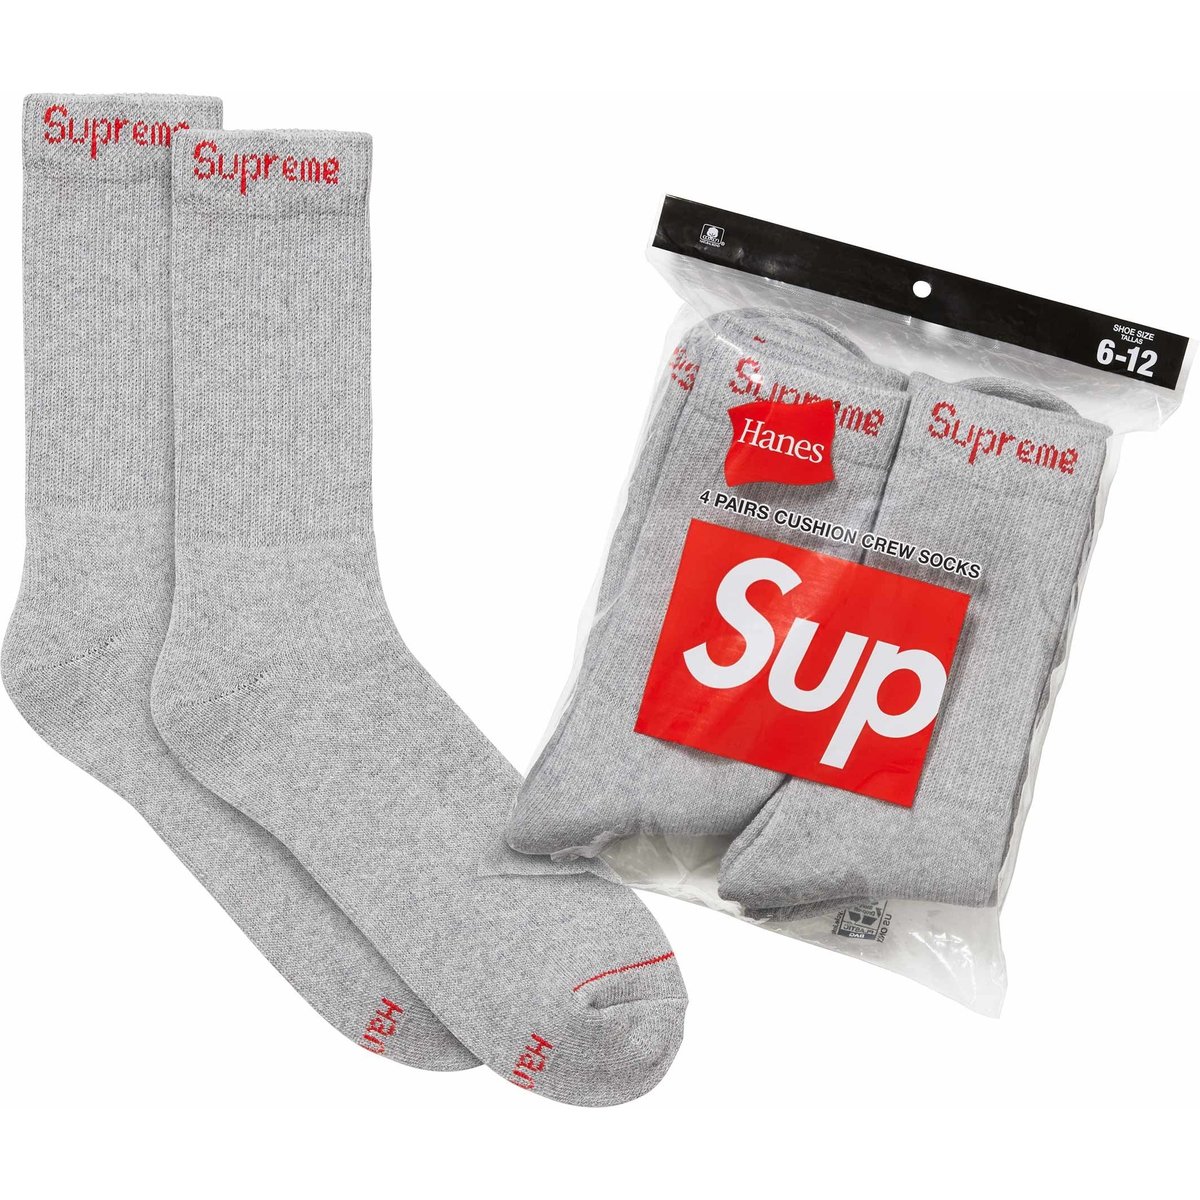 Supreme Supreme Hanes Crew Socks (4 Pack) released during spring summer 24 season